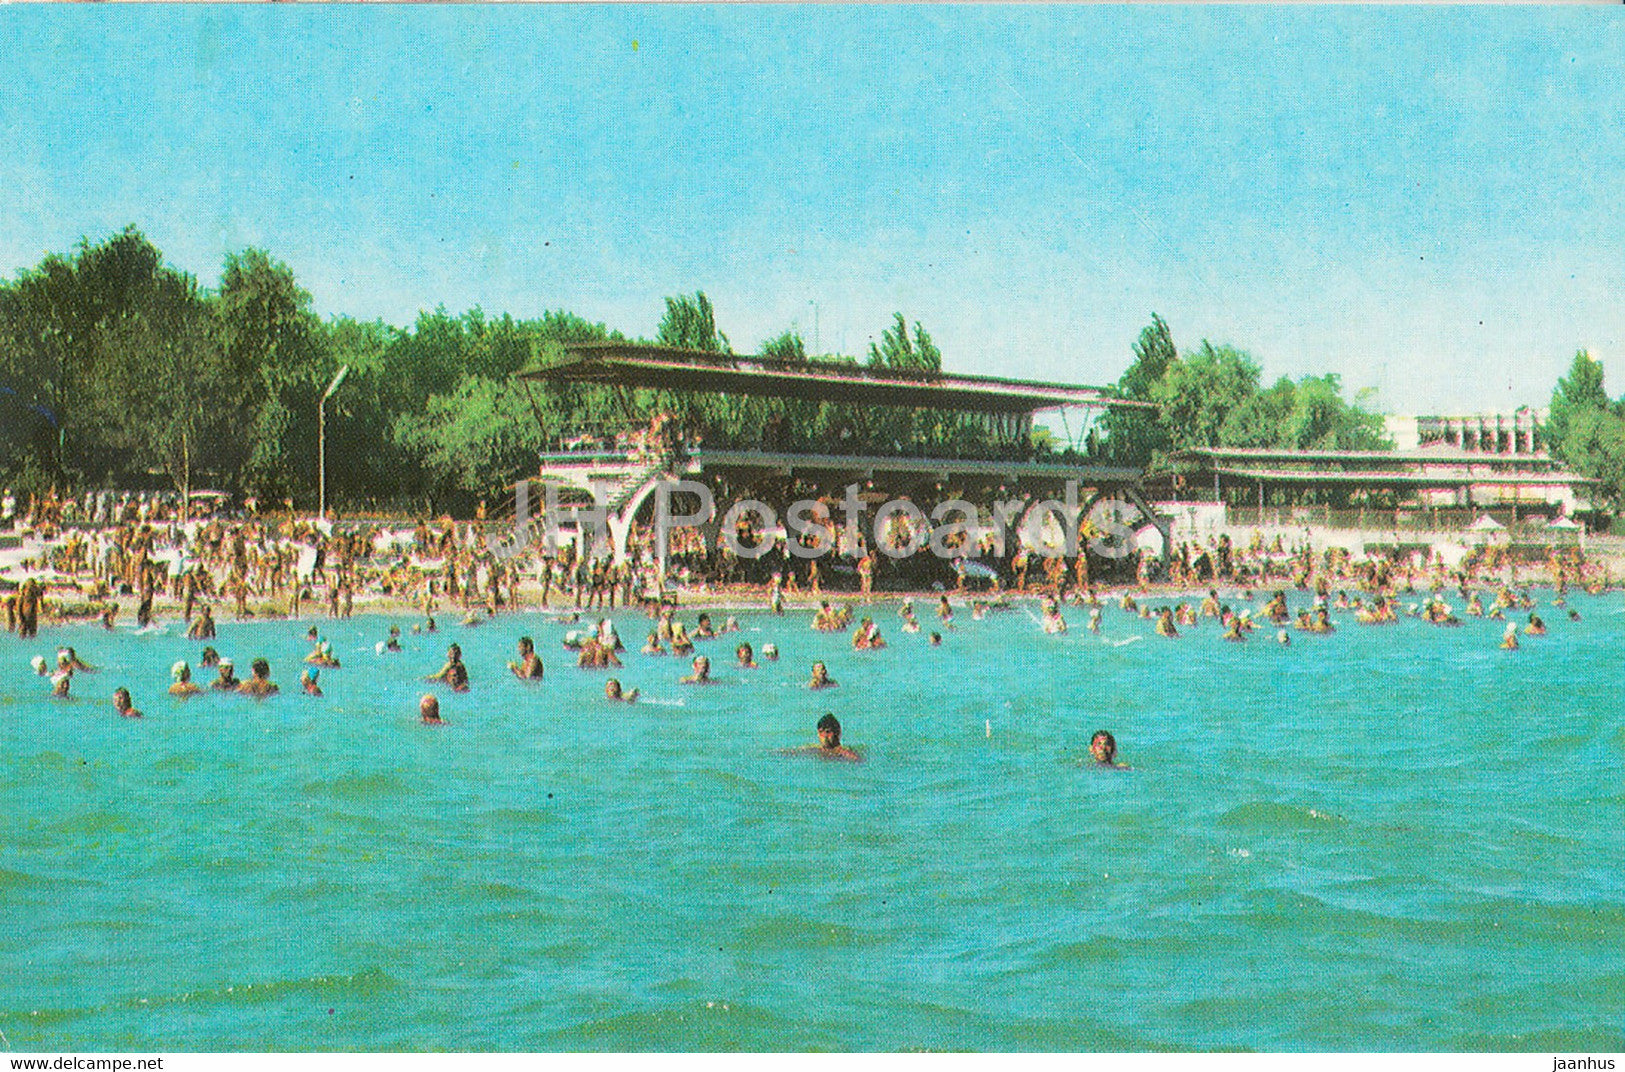 Yevpatoriya - Evpatoria - beach - Crimea - 1975 - Ukraine USSR - unused - JH Postcards